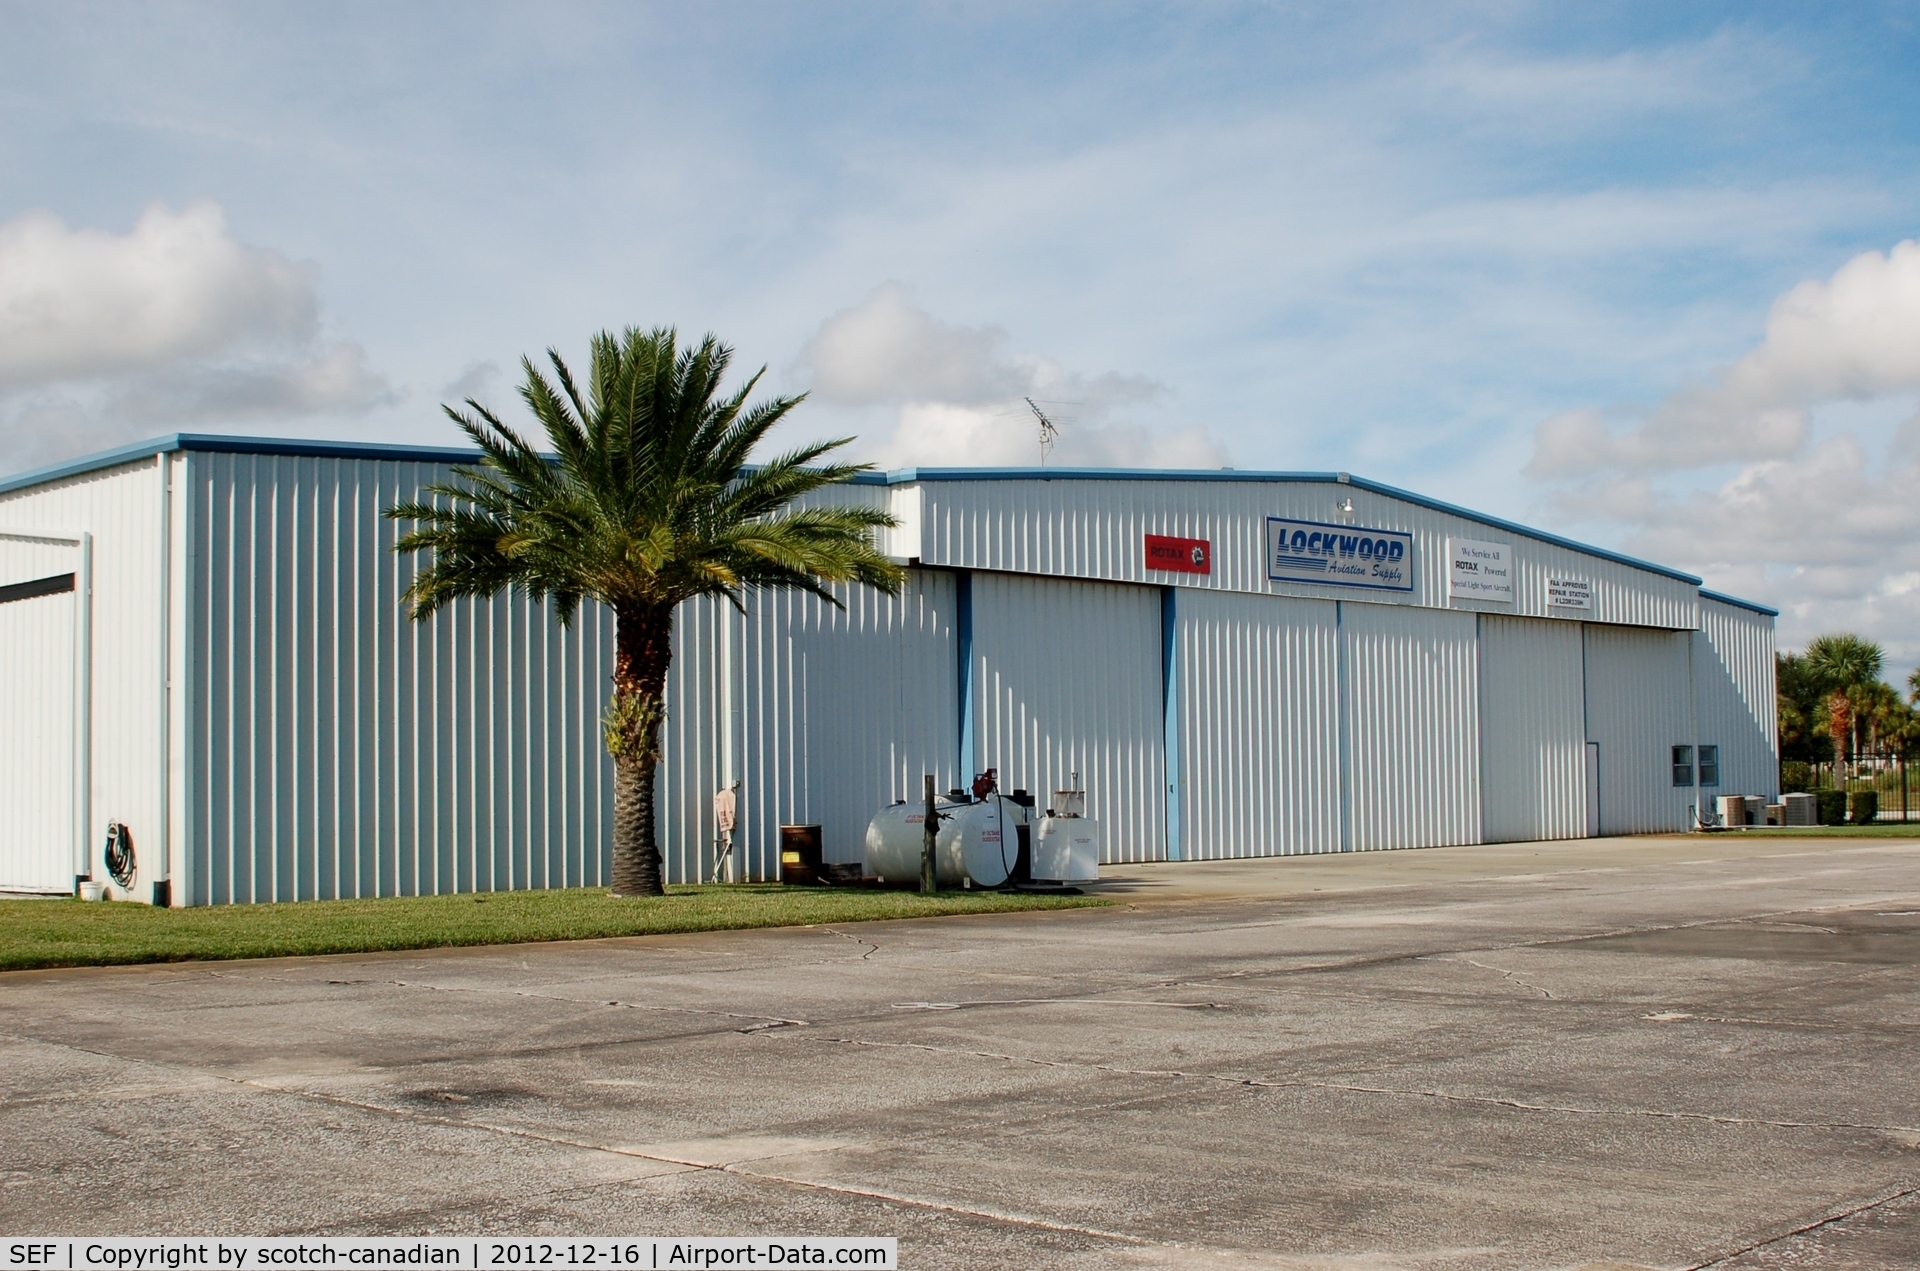 Sebring Regional Airport (SEF) - Lockwood Aviation at Sebring Regional Airport, Sebring FL